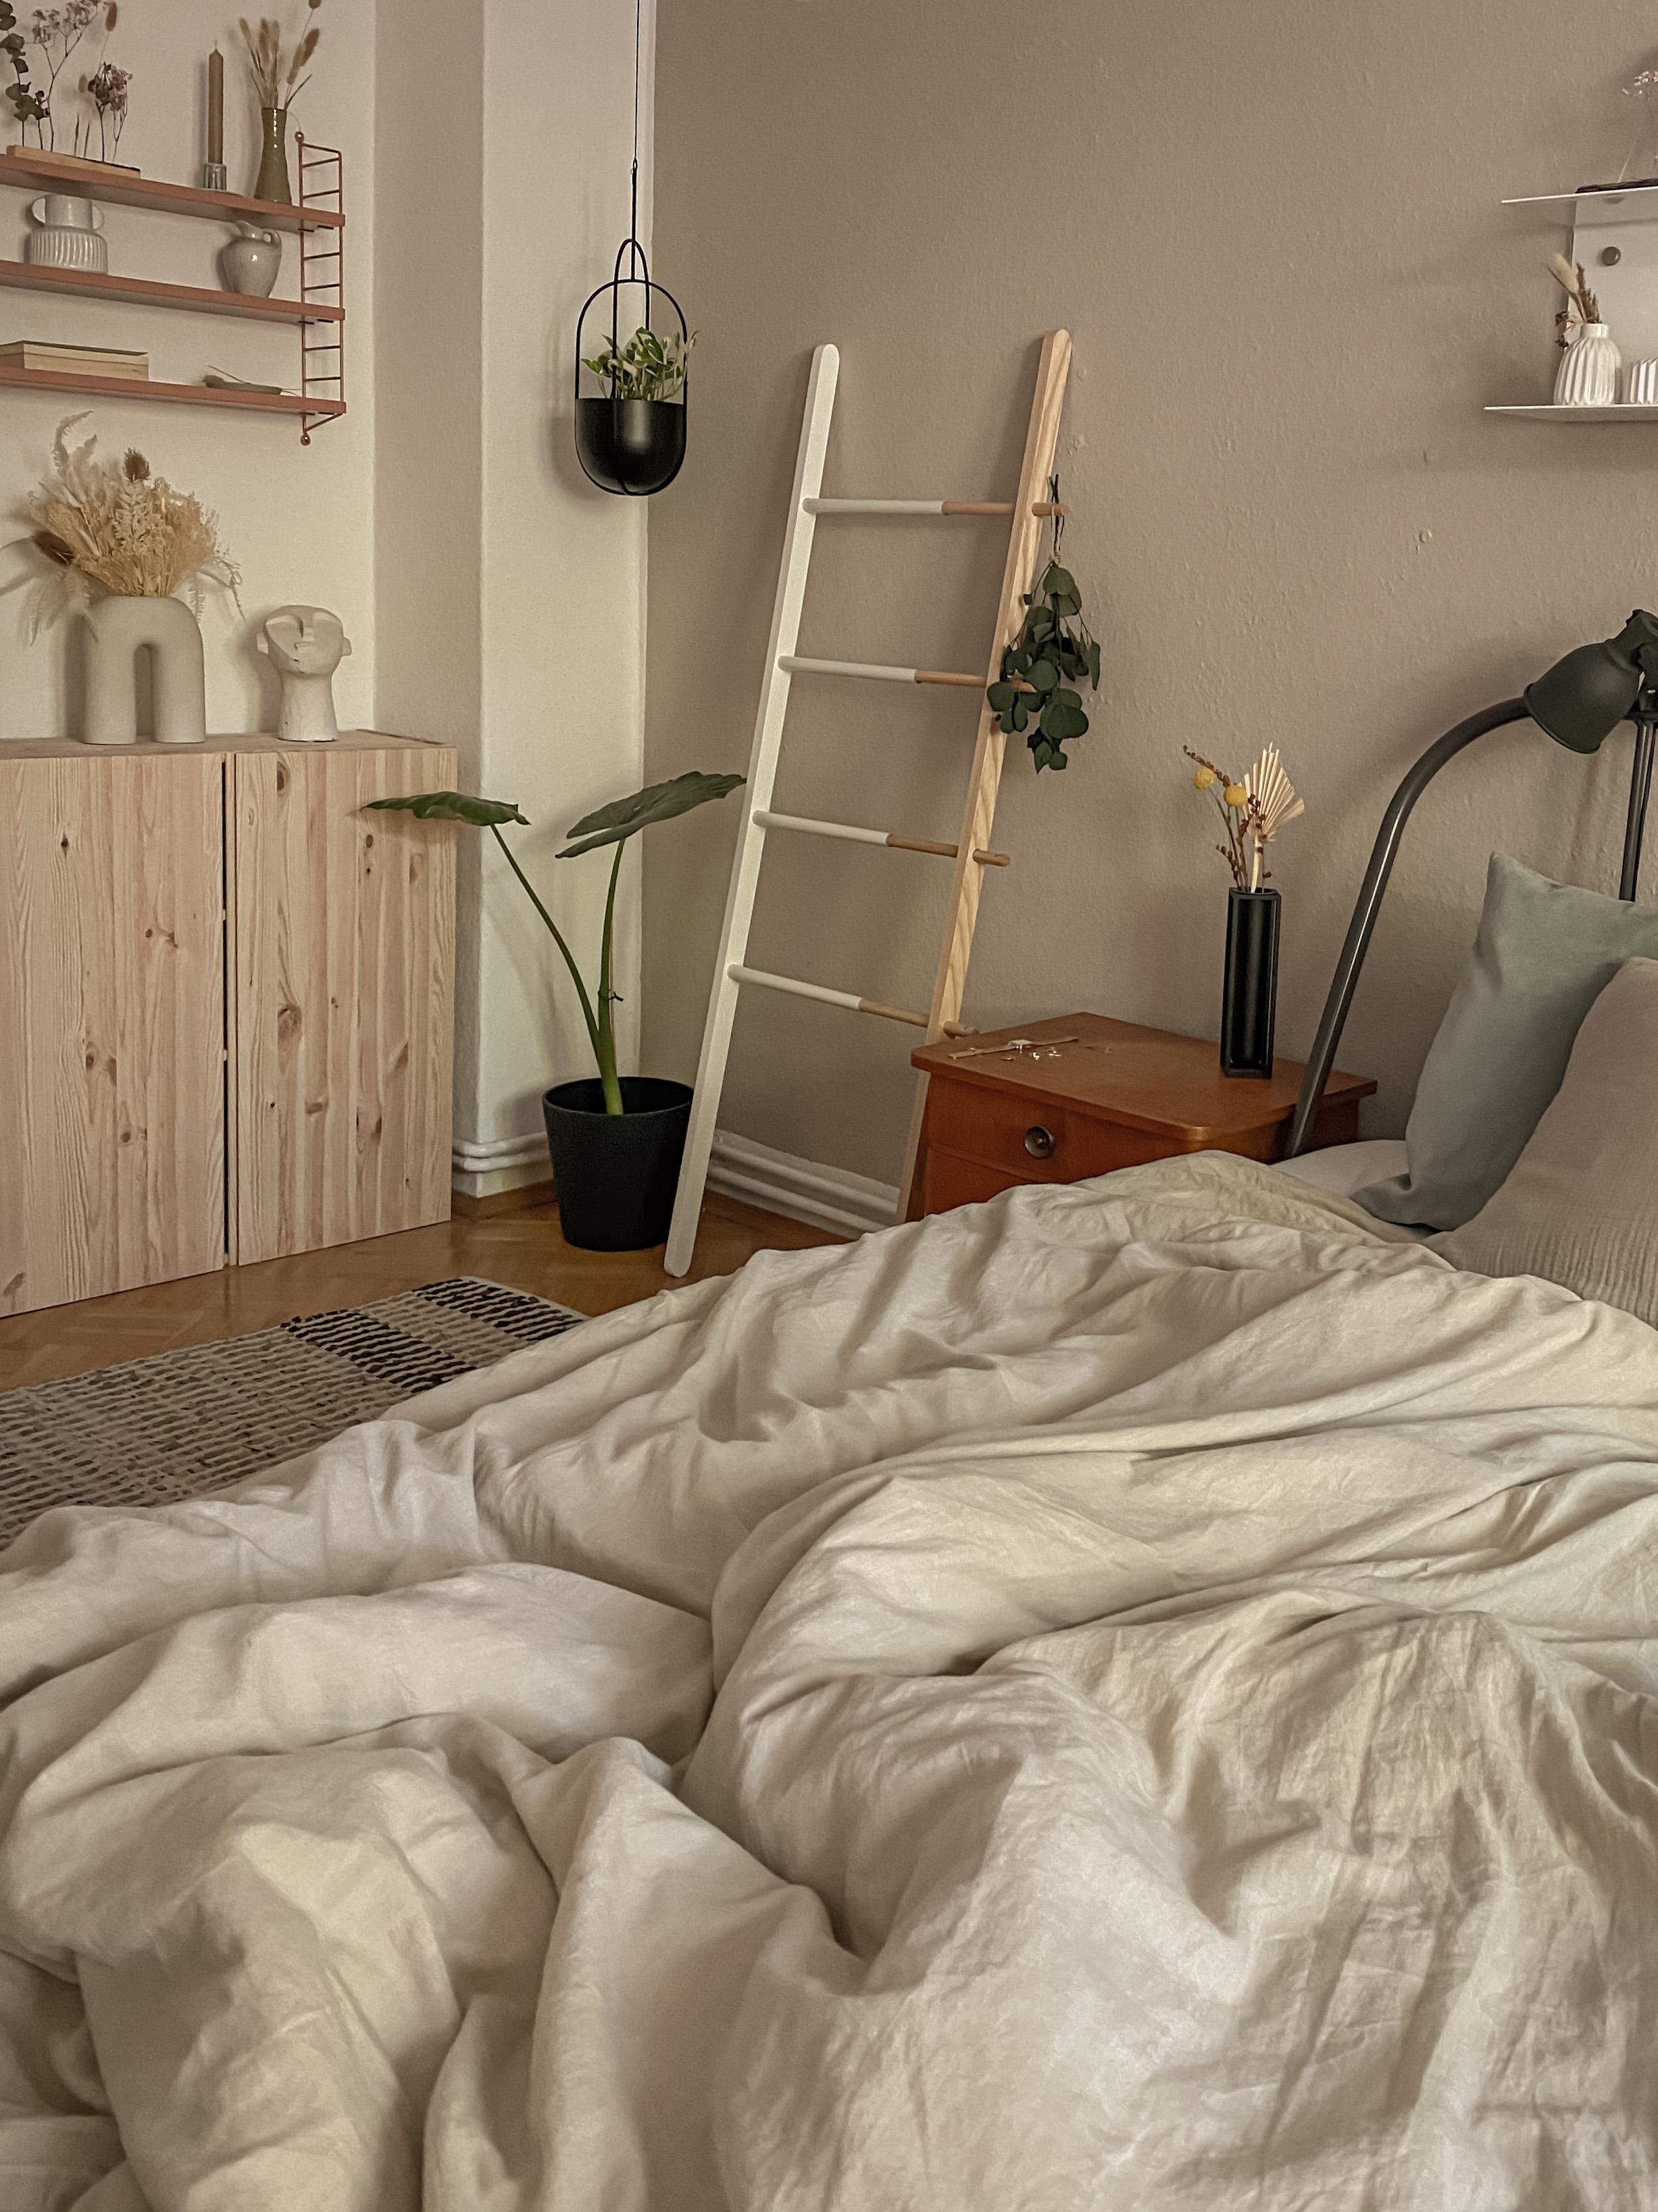 Easy like sunday mornings!✨
#bedroom #bedroominspo #morninglandscapes #scandihome #nordicliving #bohostyle #bohovibes